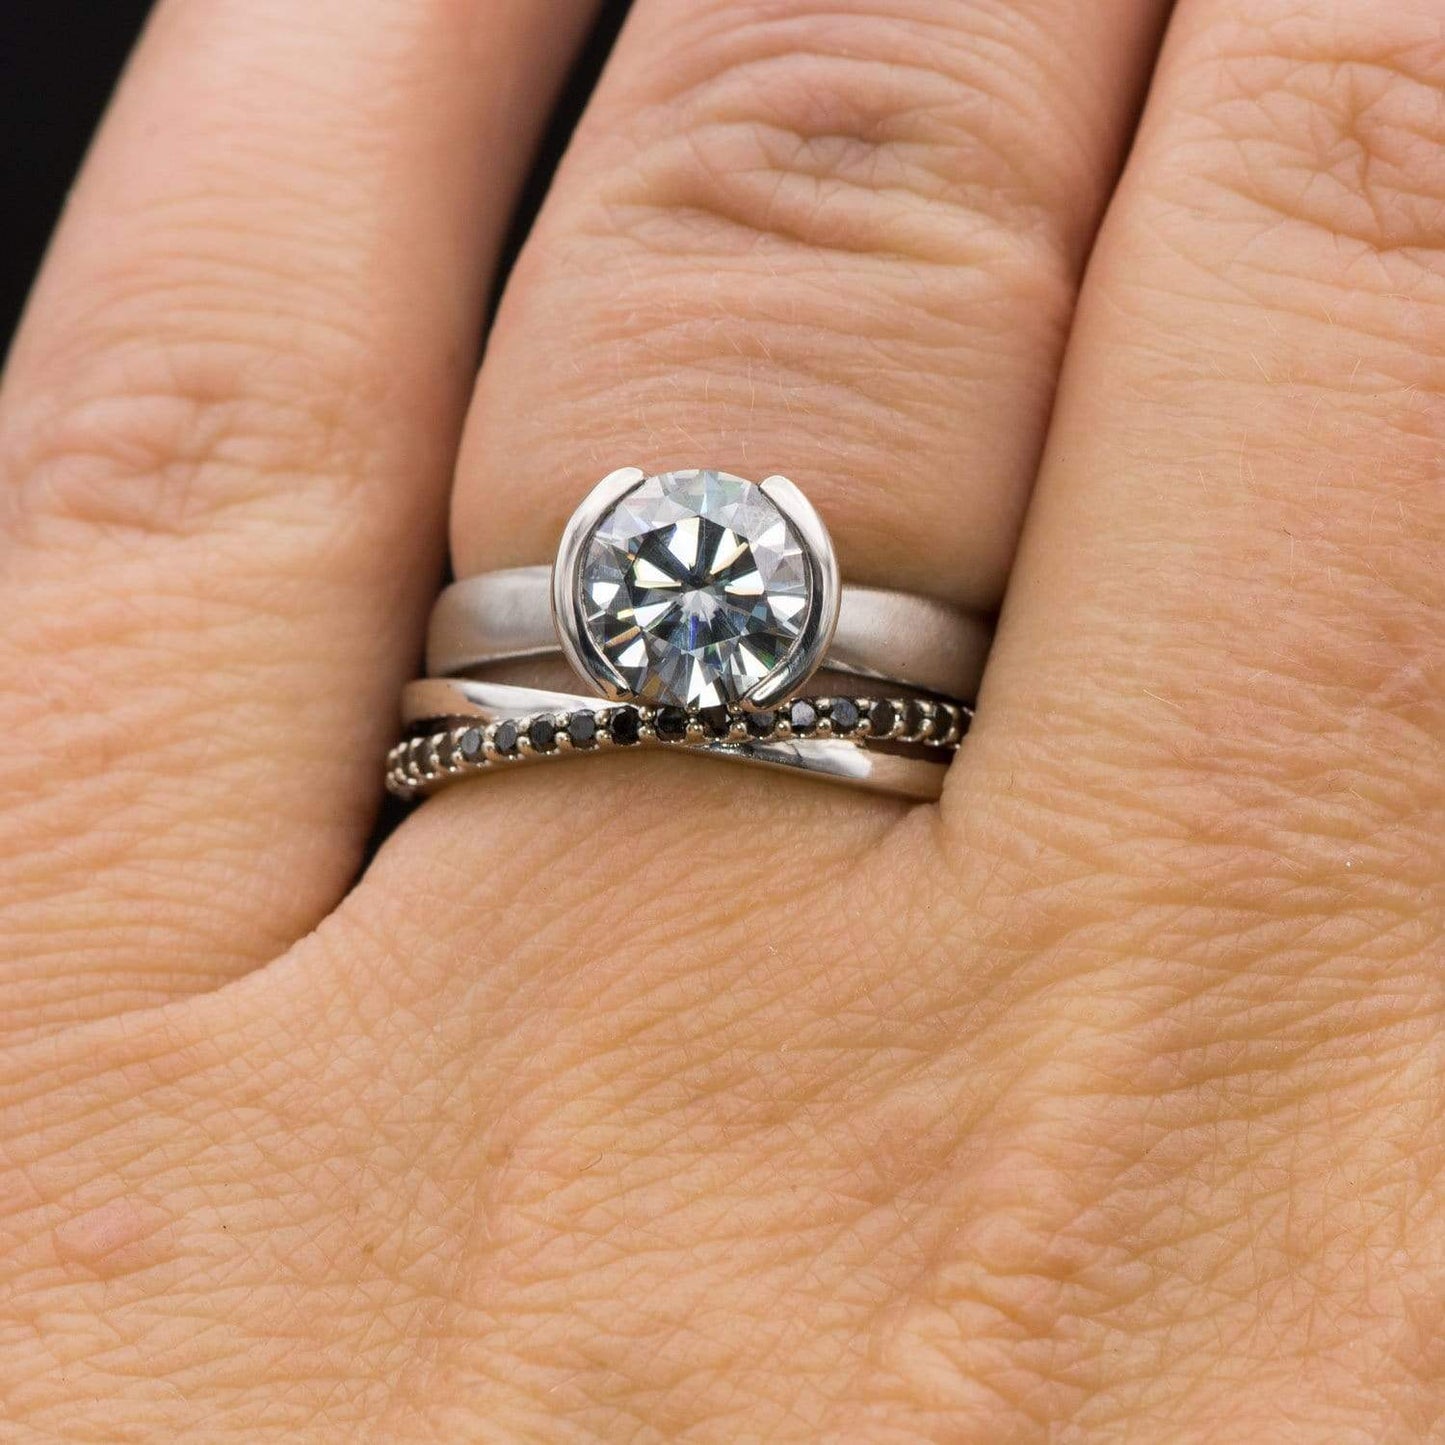 Criss Cross Black Diamond Band - Contoured Wedding Ring with Black Diamonds Ring by Nodeform